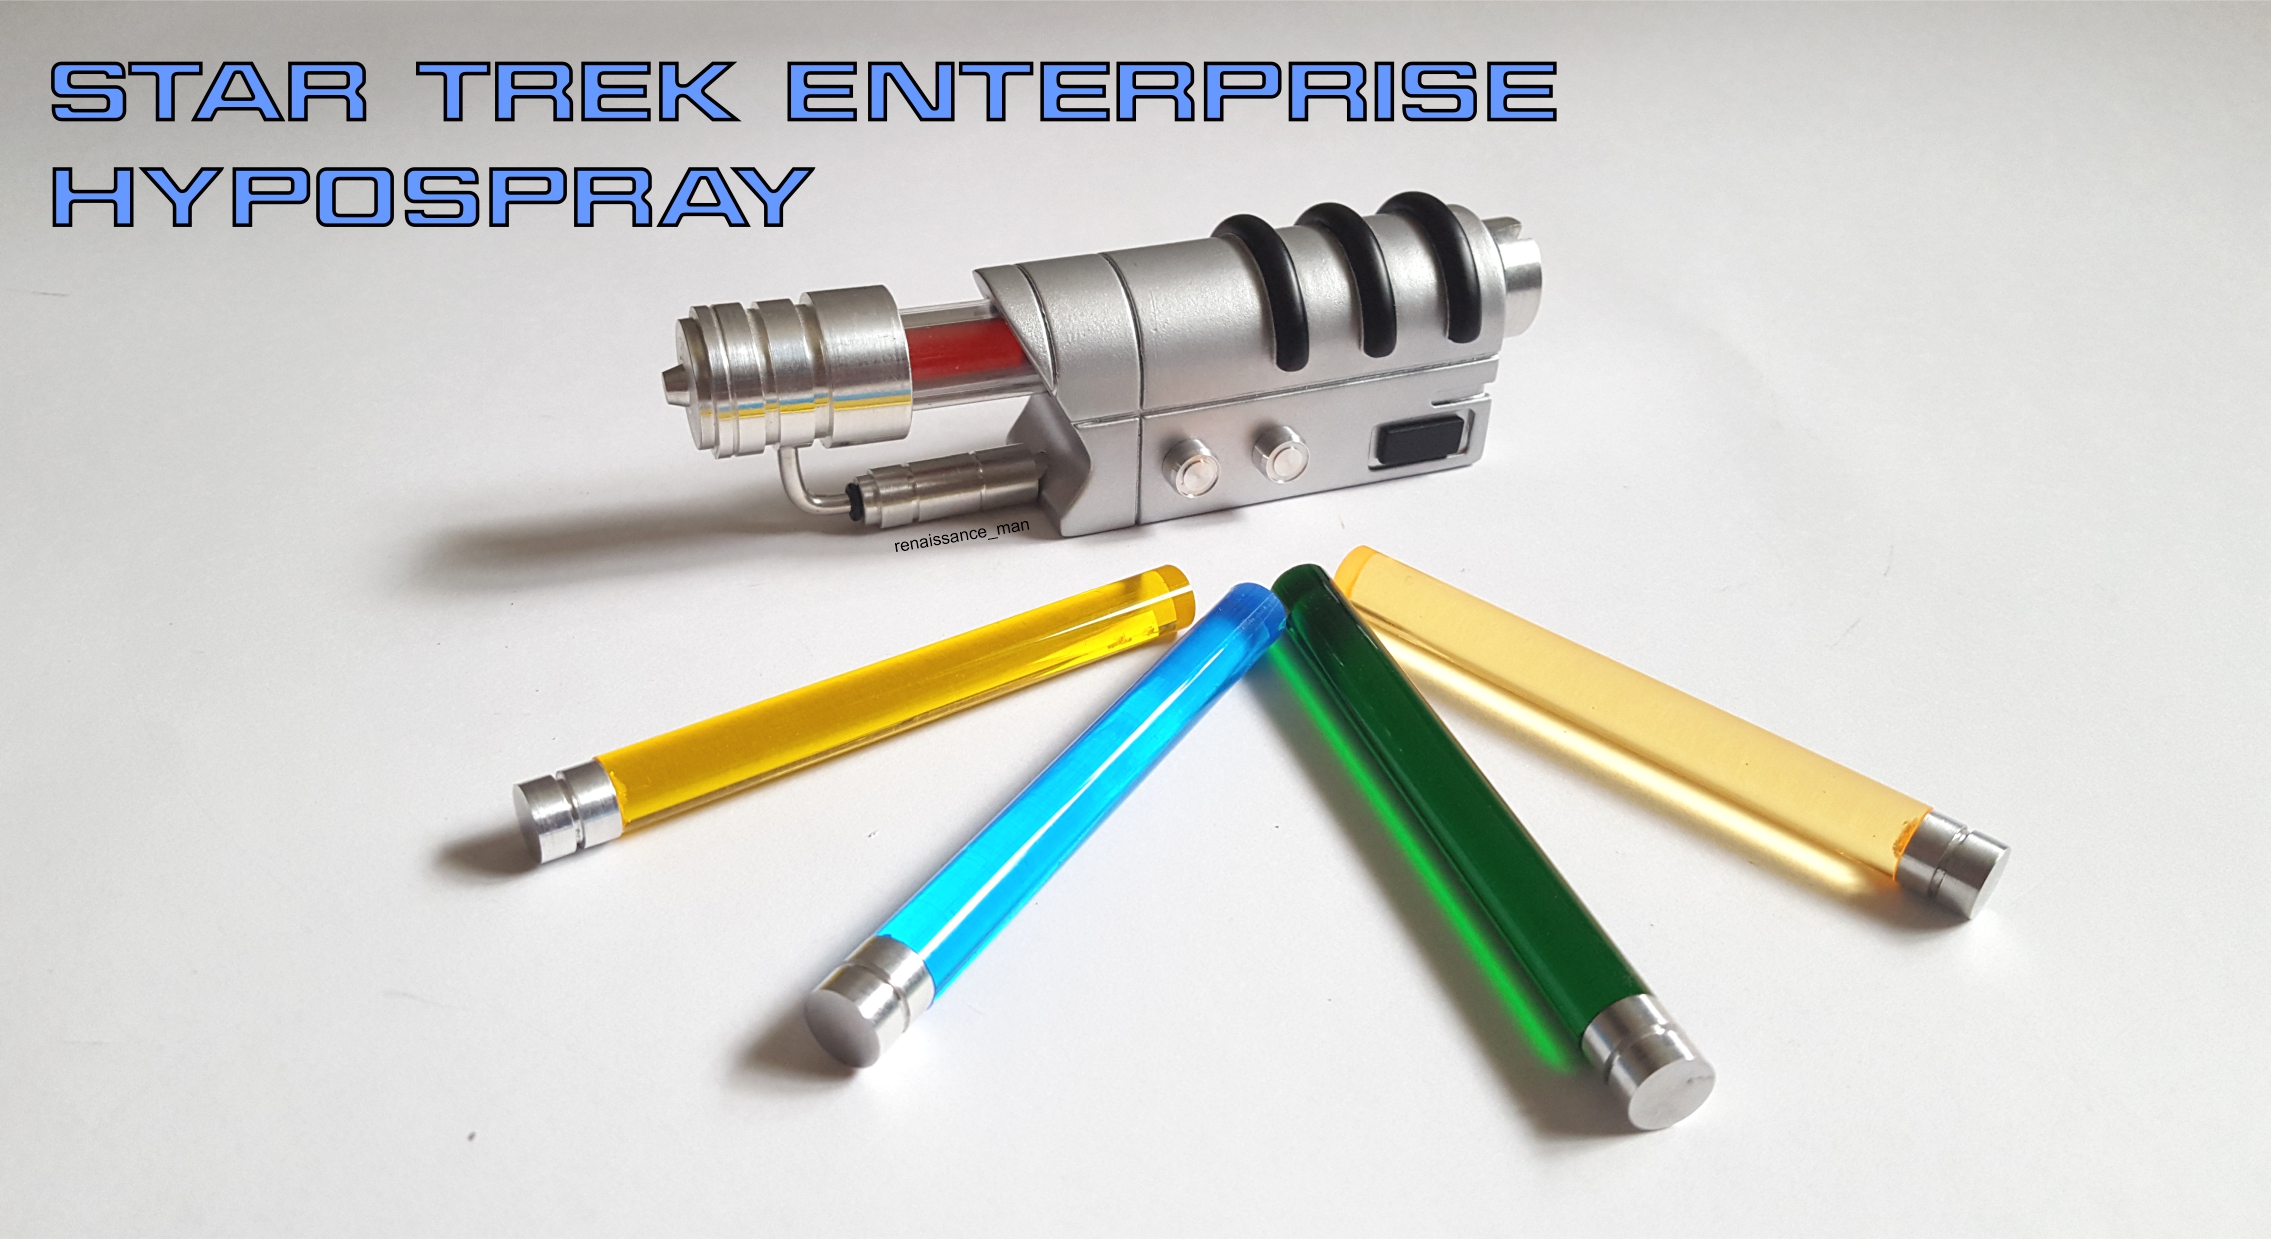 Enterprise-Hypospray-collage-3.jpg